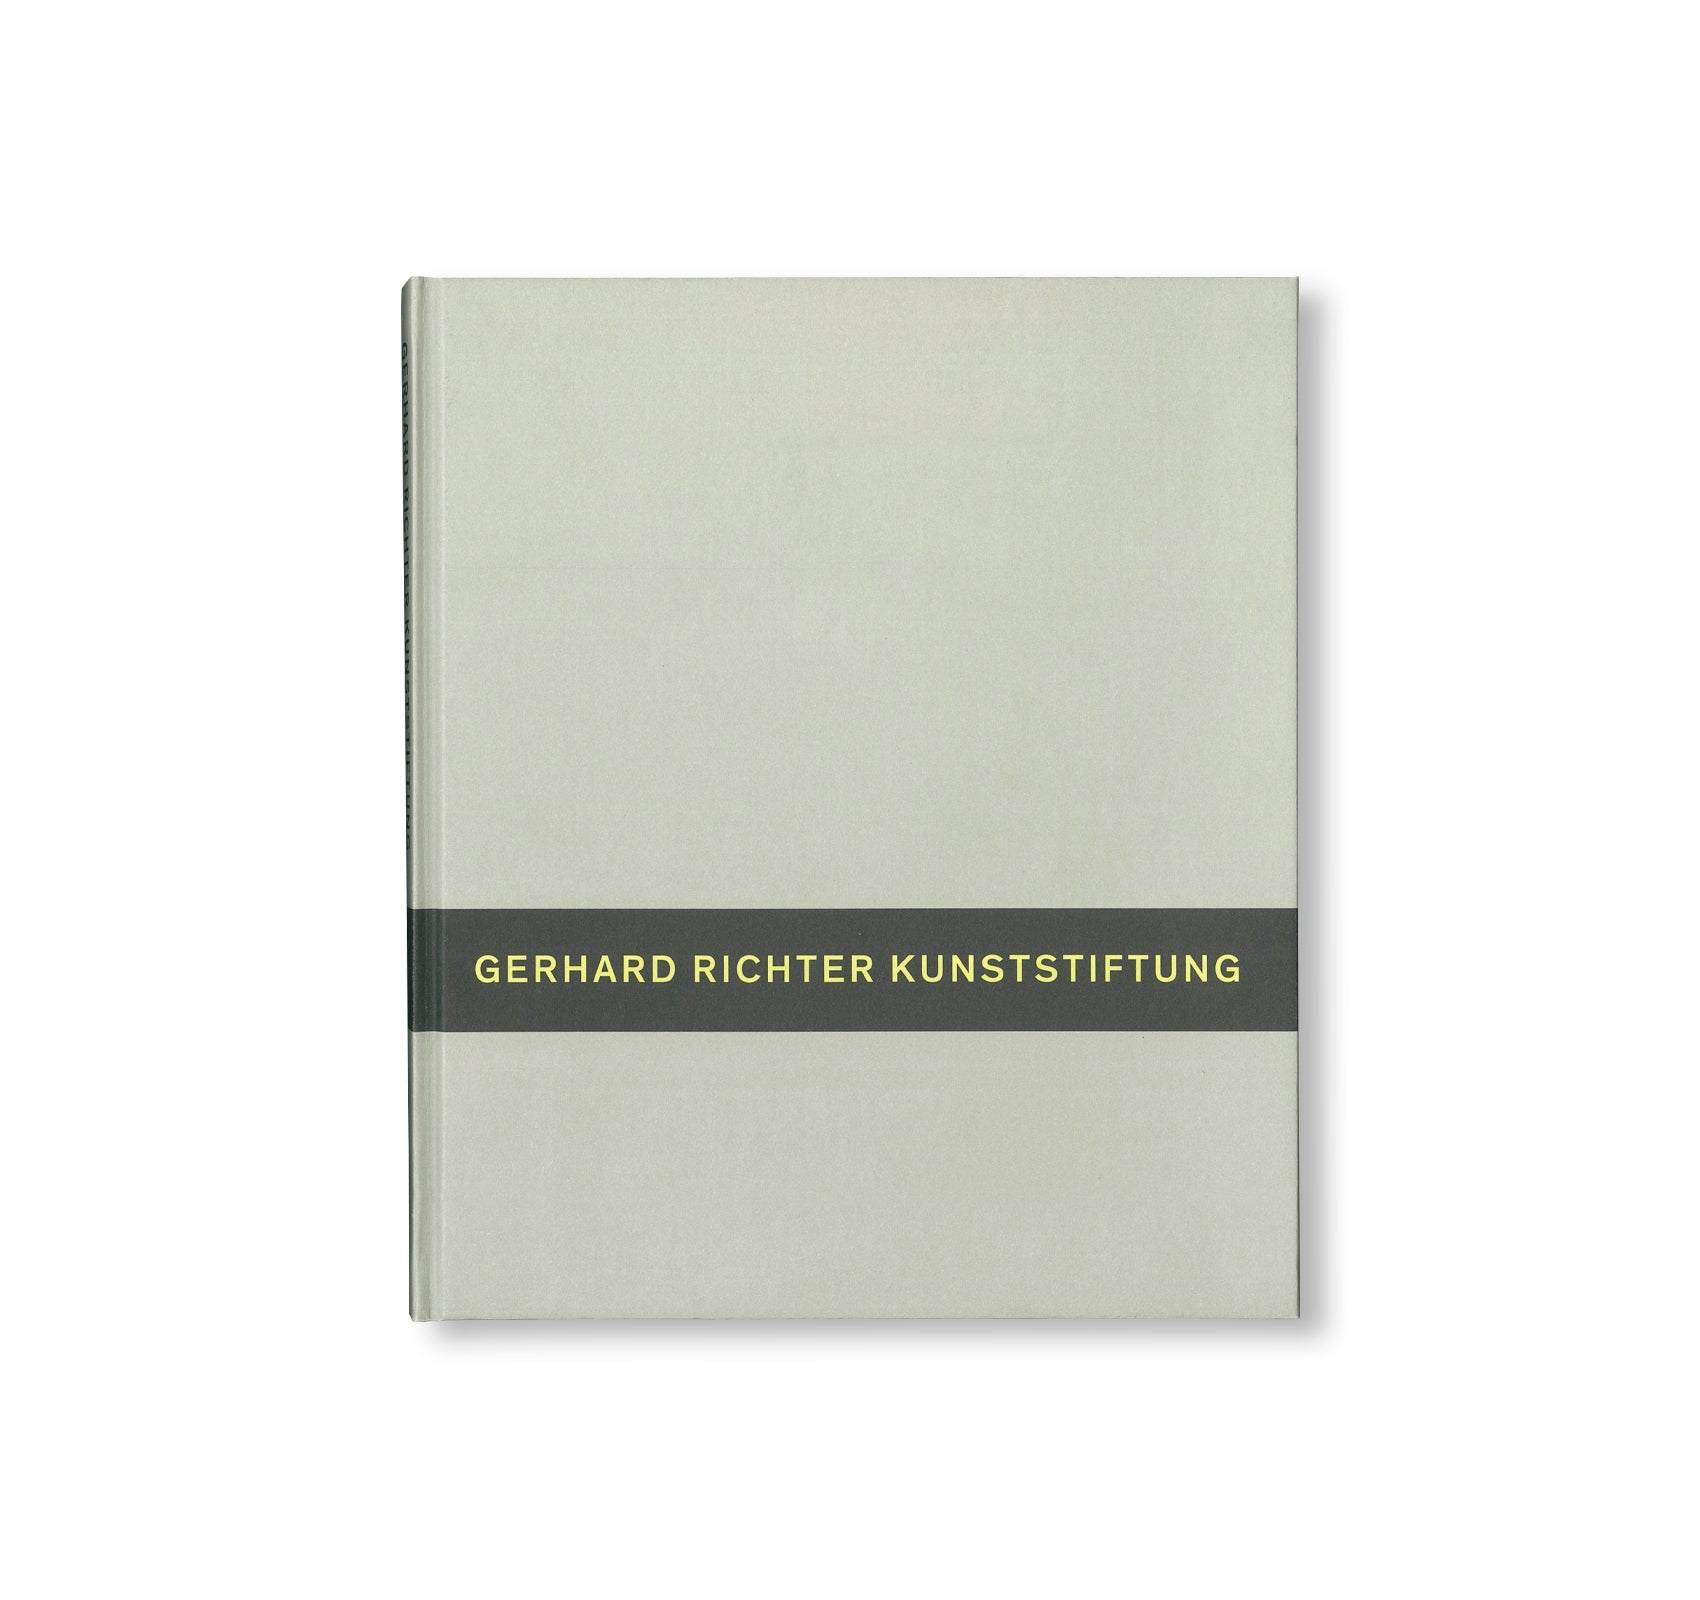 GERHARD RICHTER KUNSTSTIFTUNG by Gerhard Richter